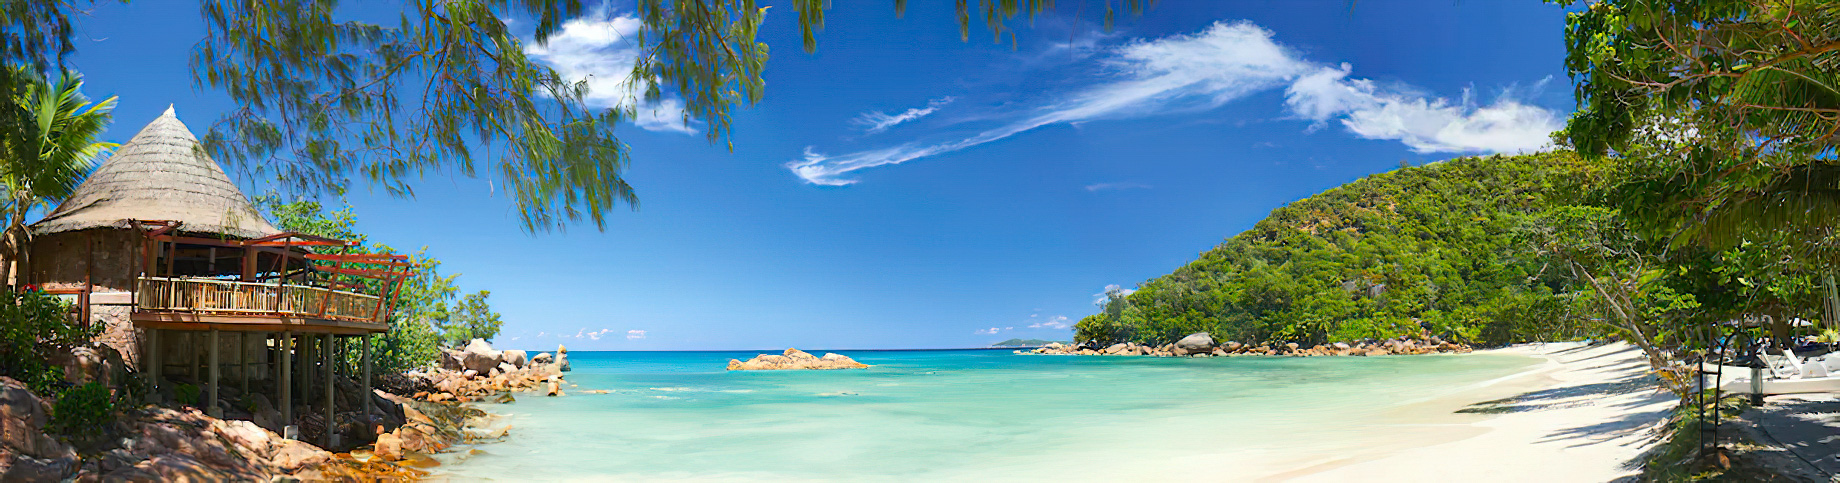 Constance Lemuria Resort – Praslin, Seychelles – Beach View